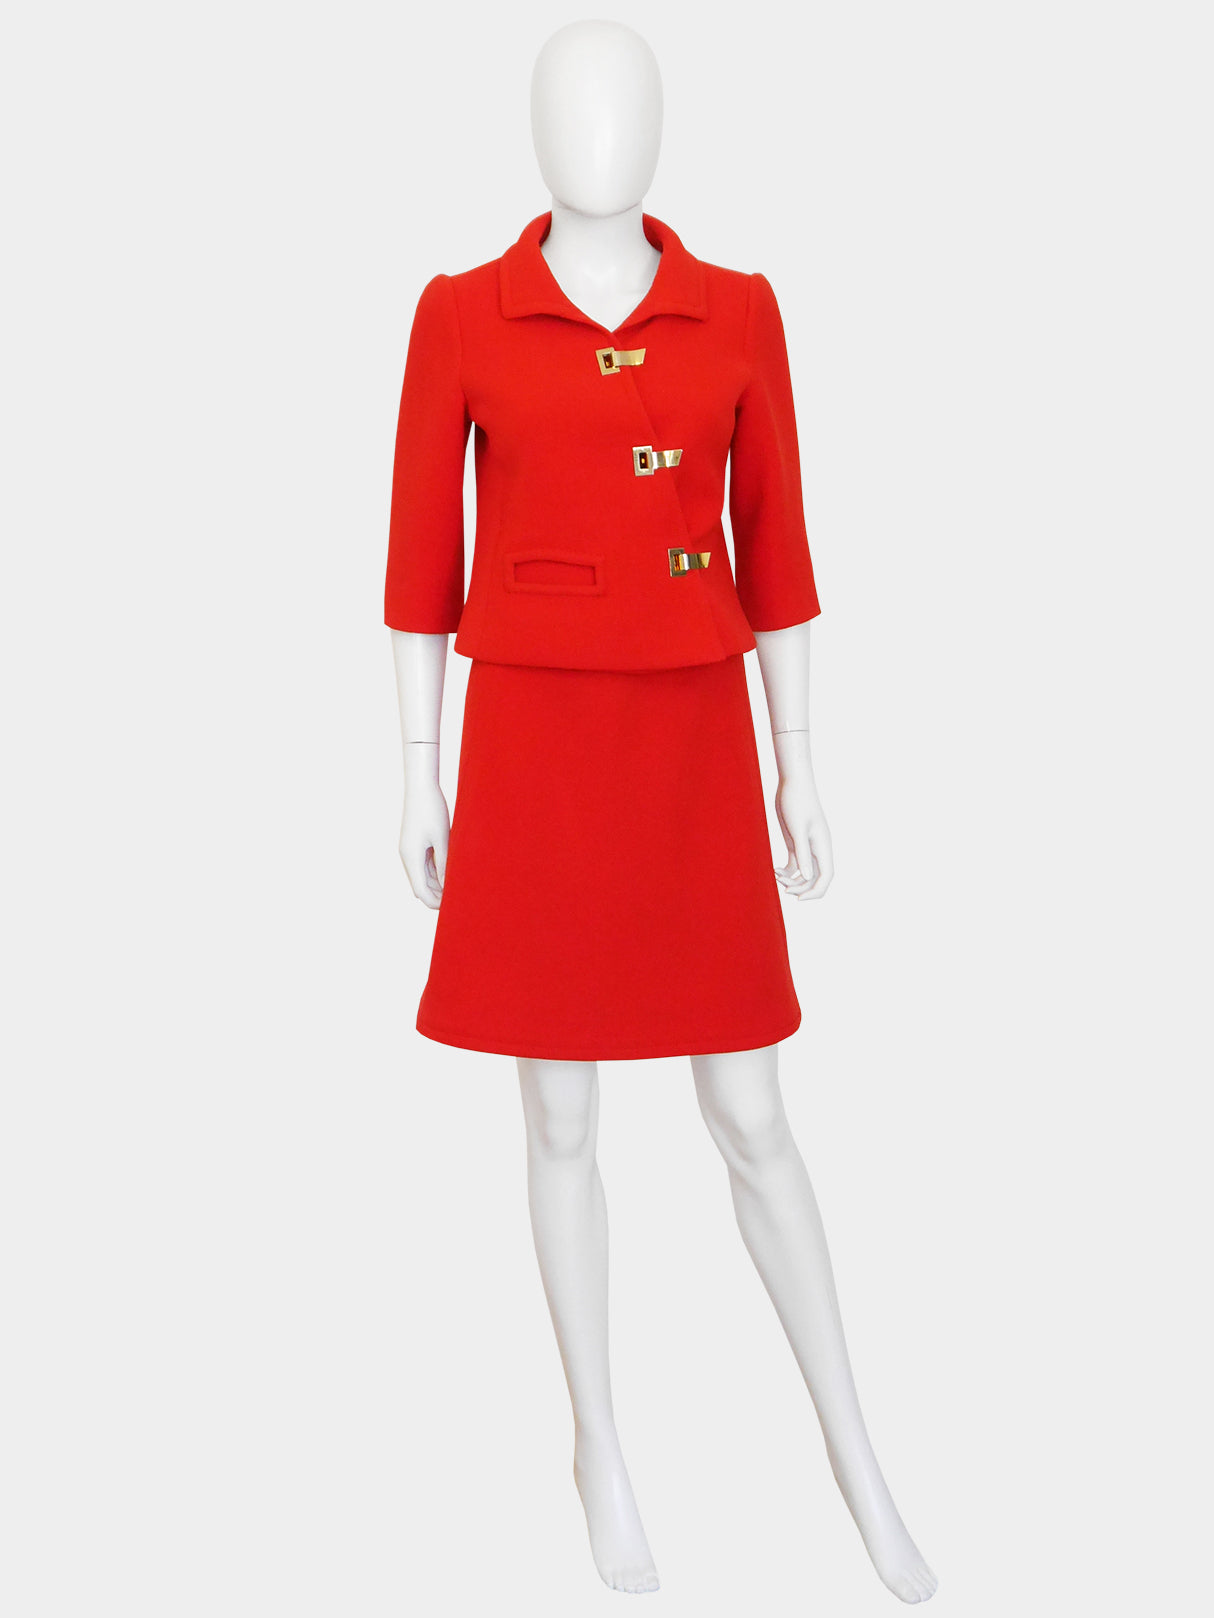 PIERRE CARDIN c. 1967 Cosmocorps Vintage Suit Skirt & Jacket Size XS